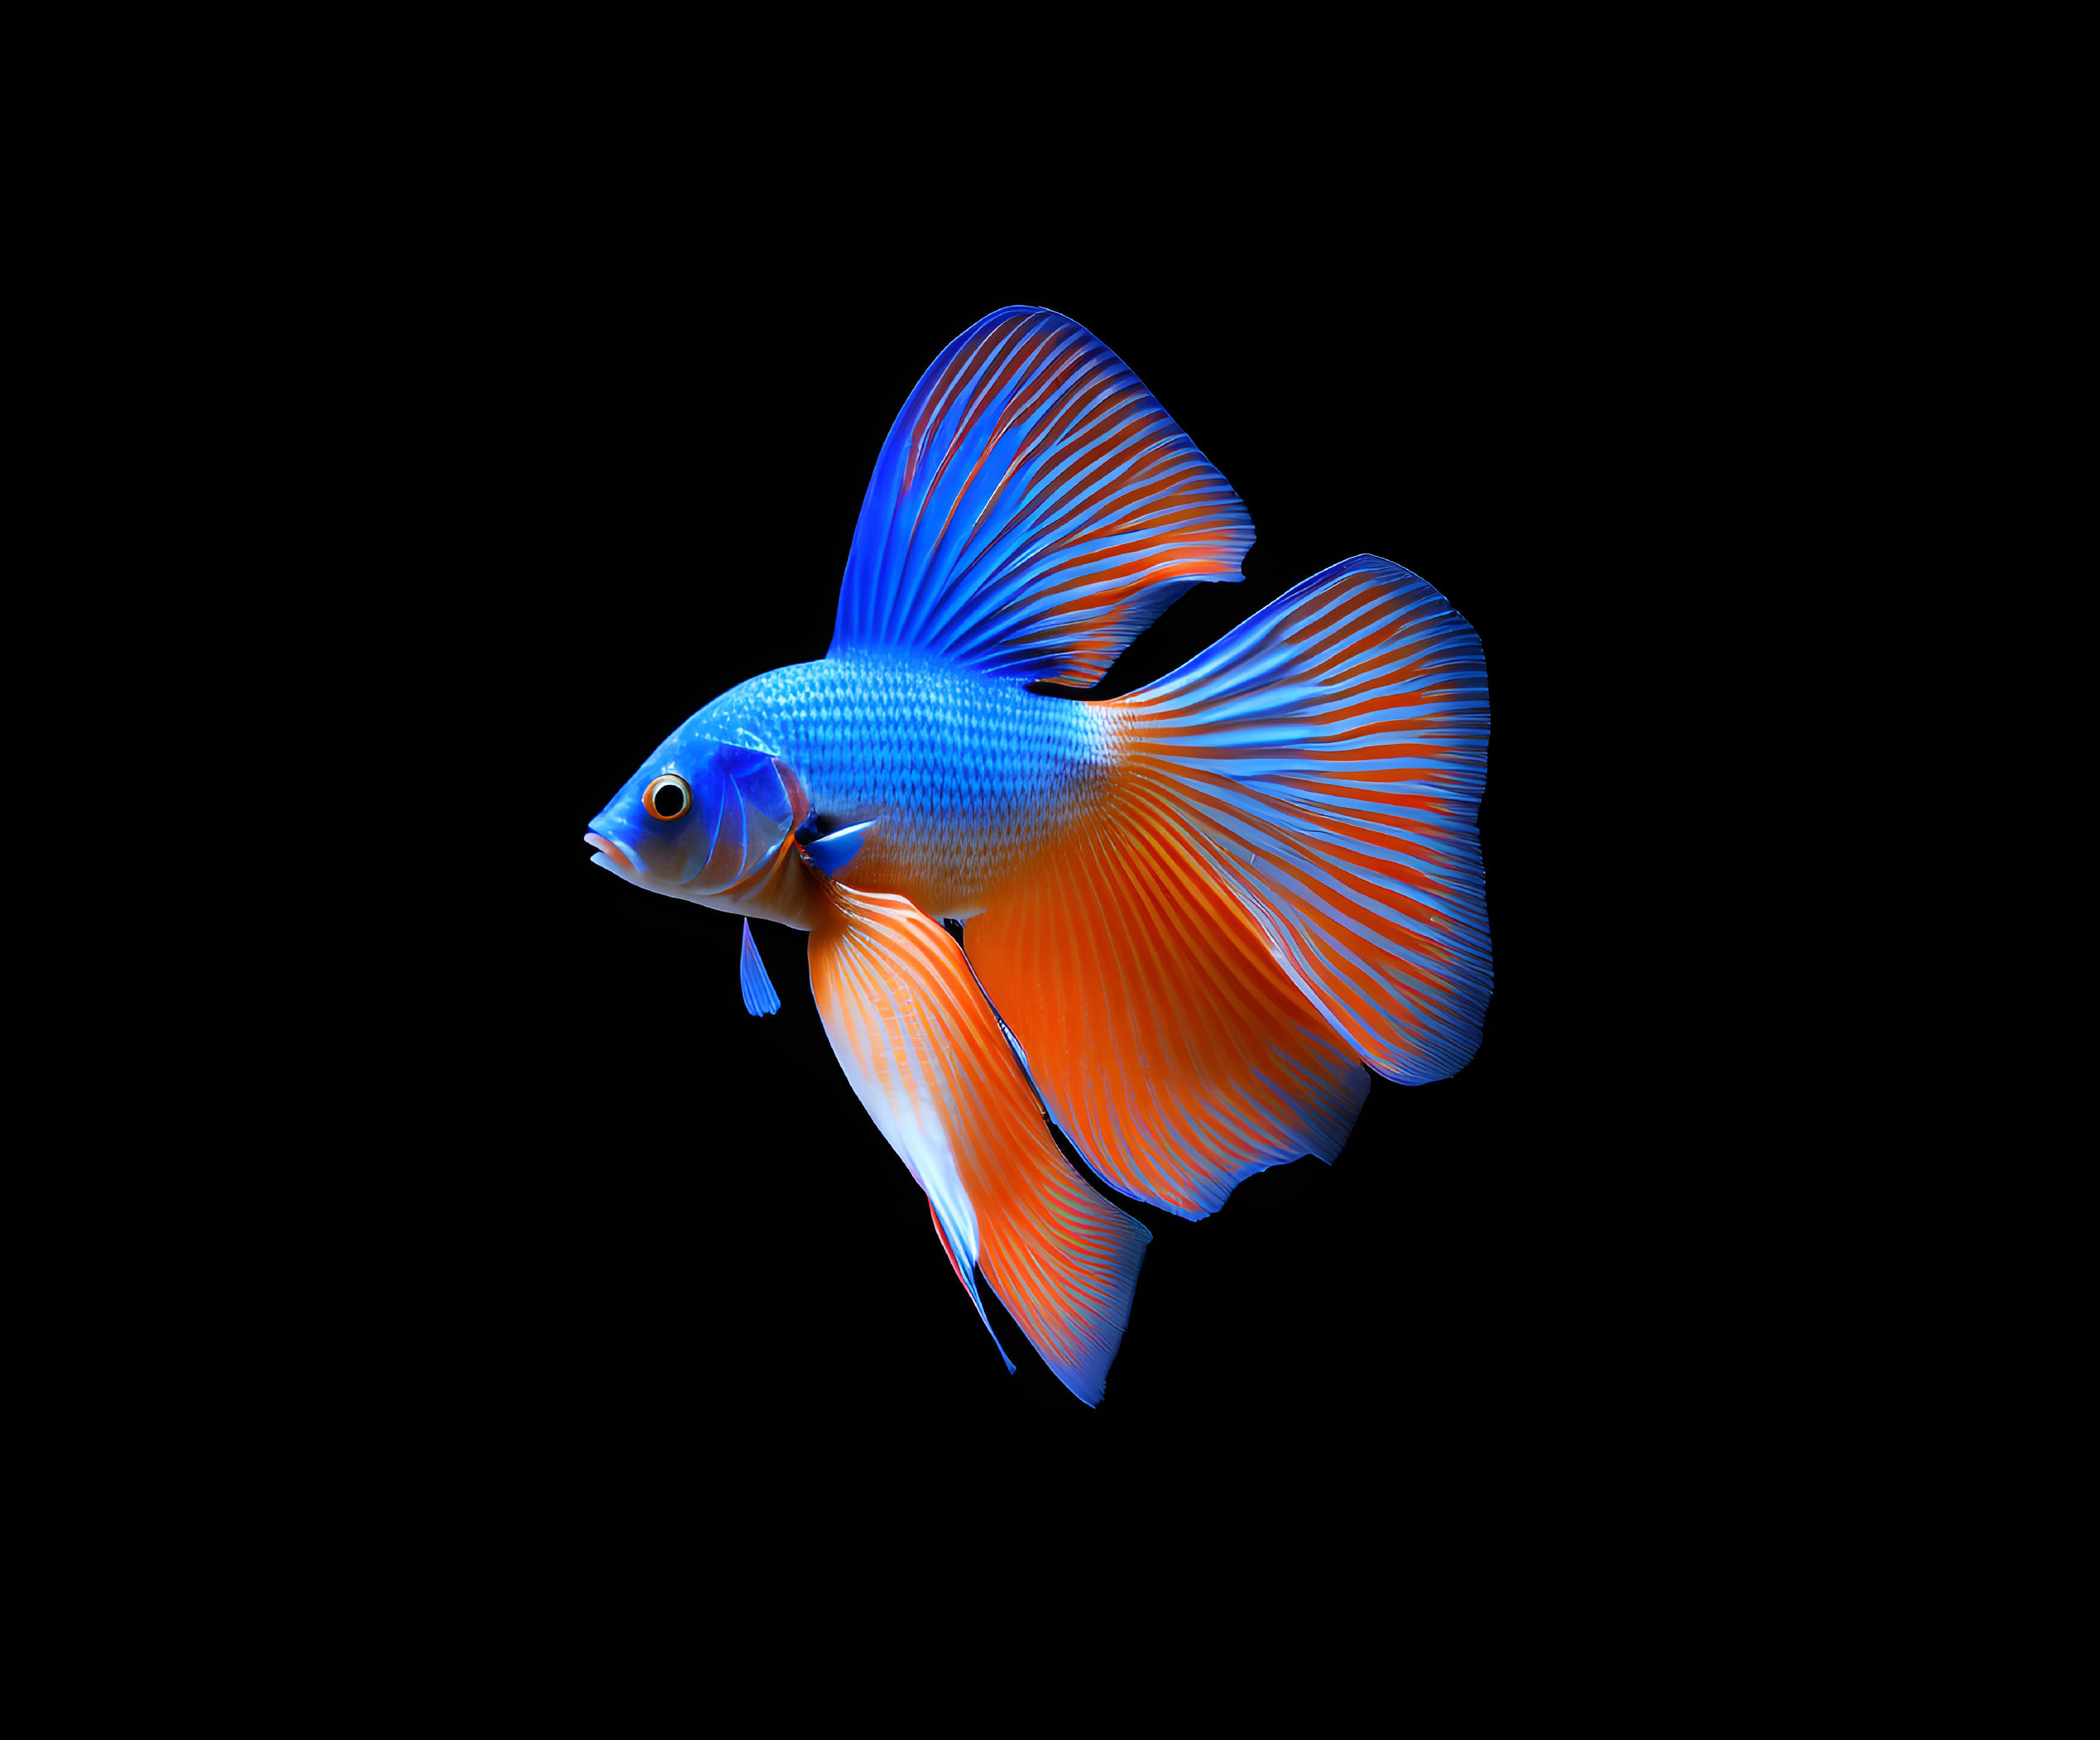 Colorful Betta Fish Displaying Spread Fins in Dark Setting